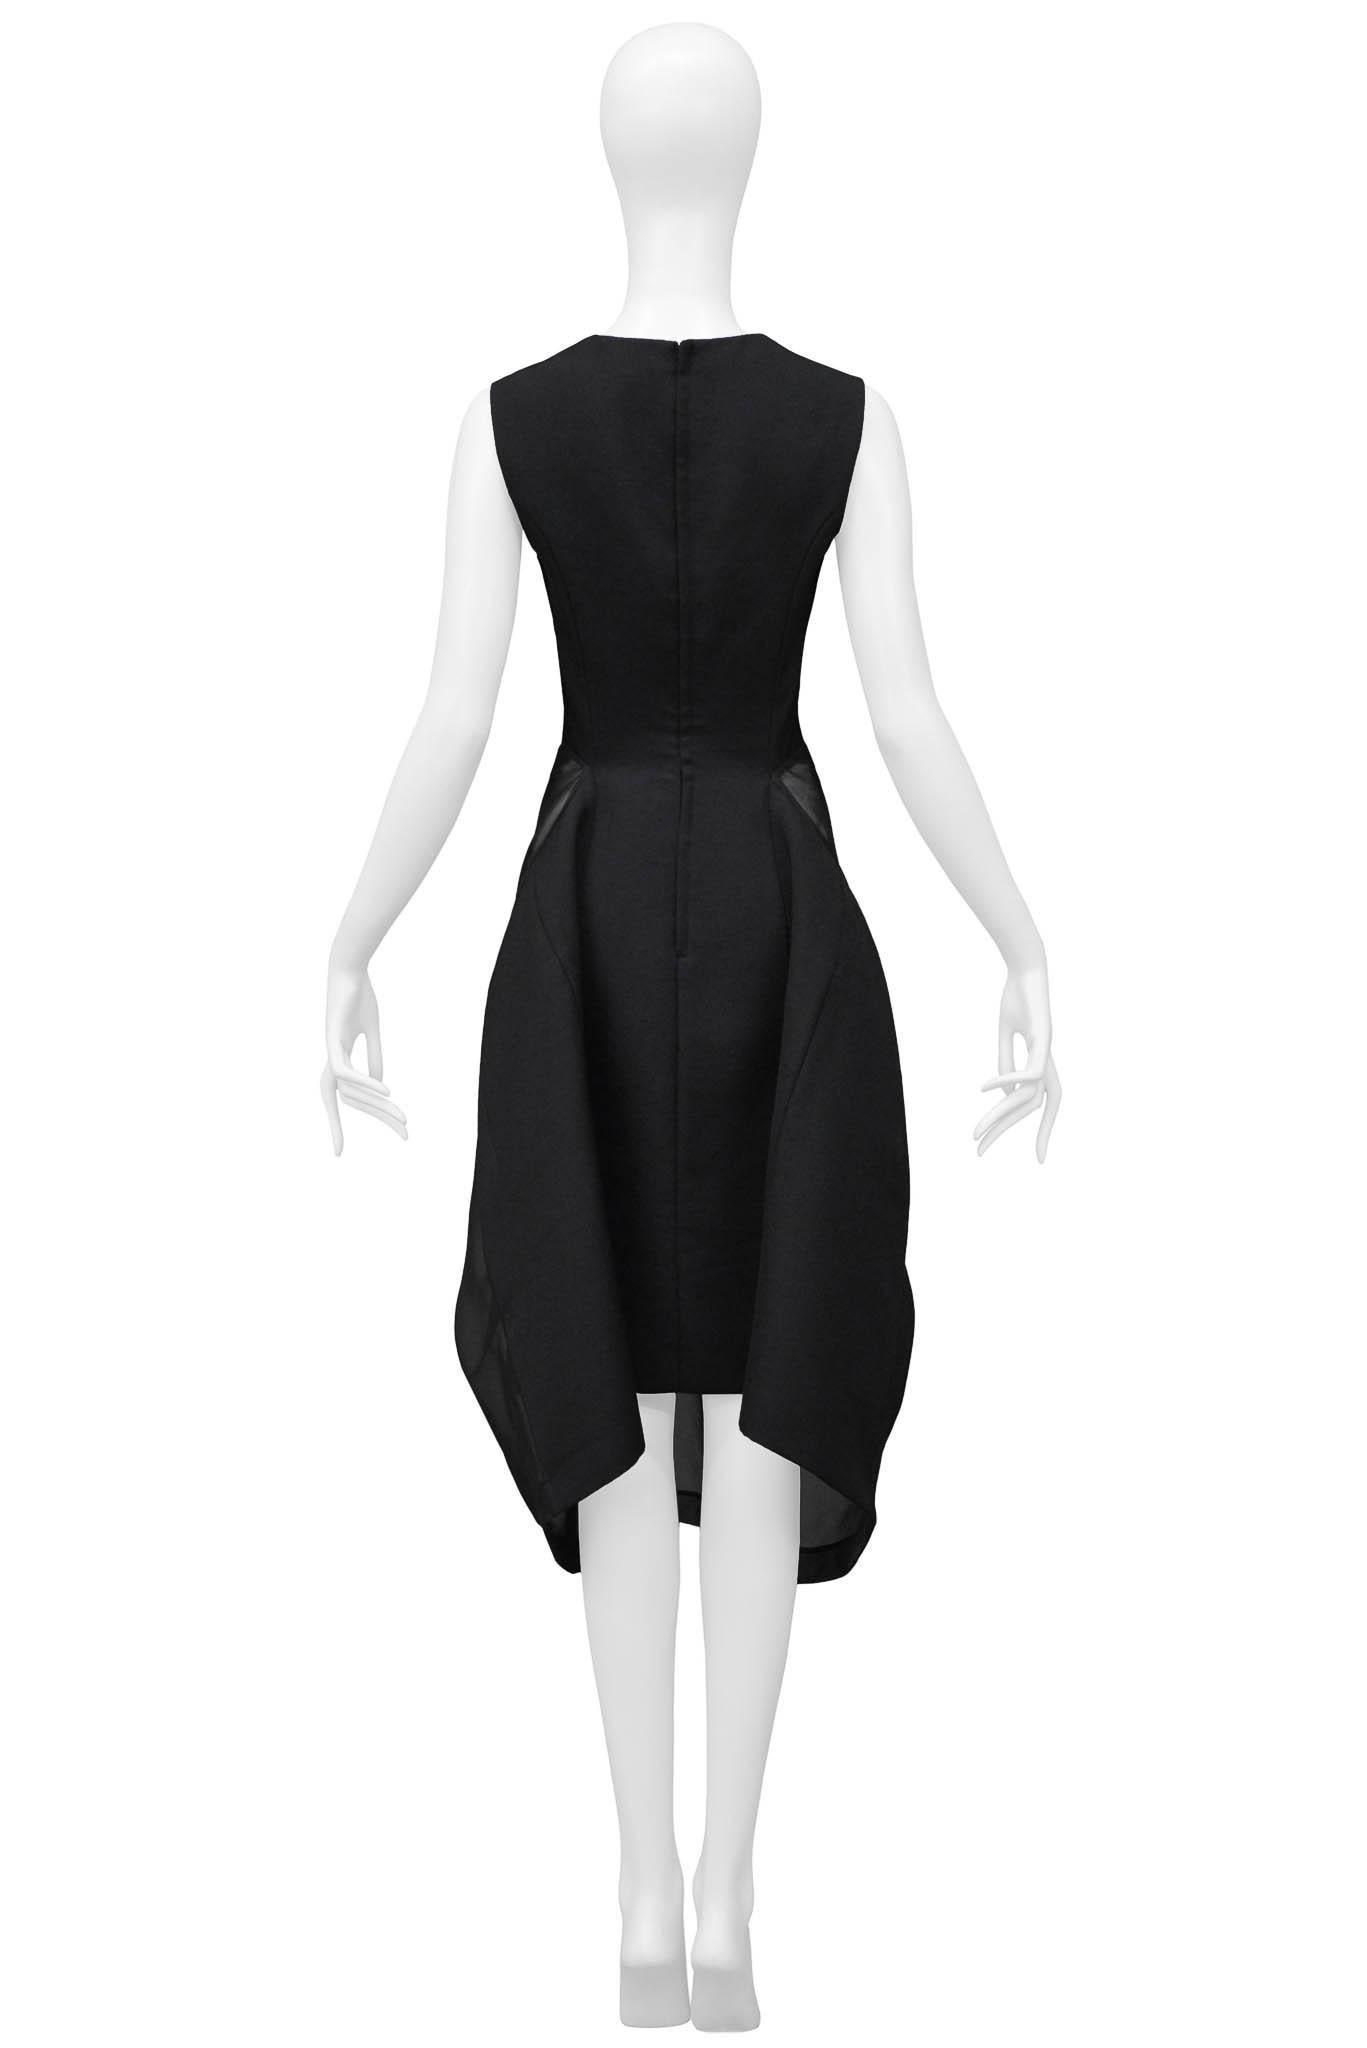 Comme Des Garcons Black Sheer Front Concept Dress 1997 For Sale 3